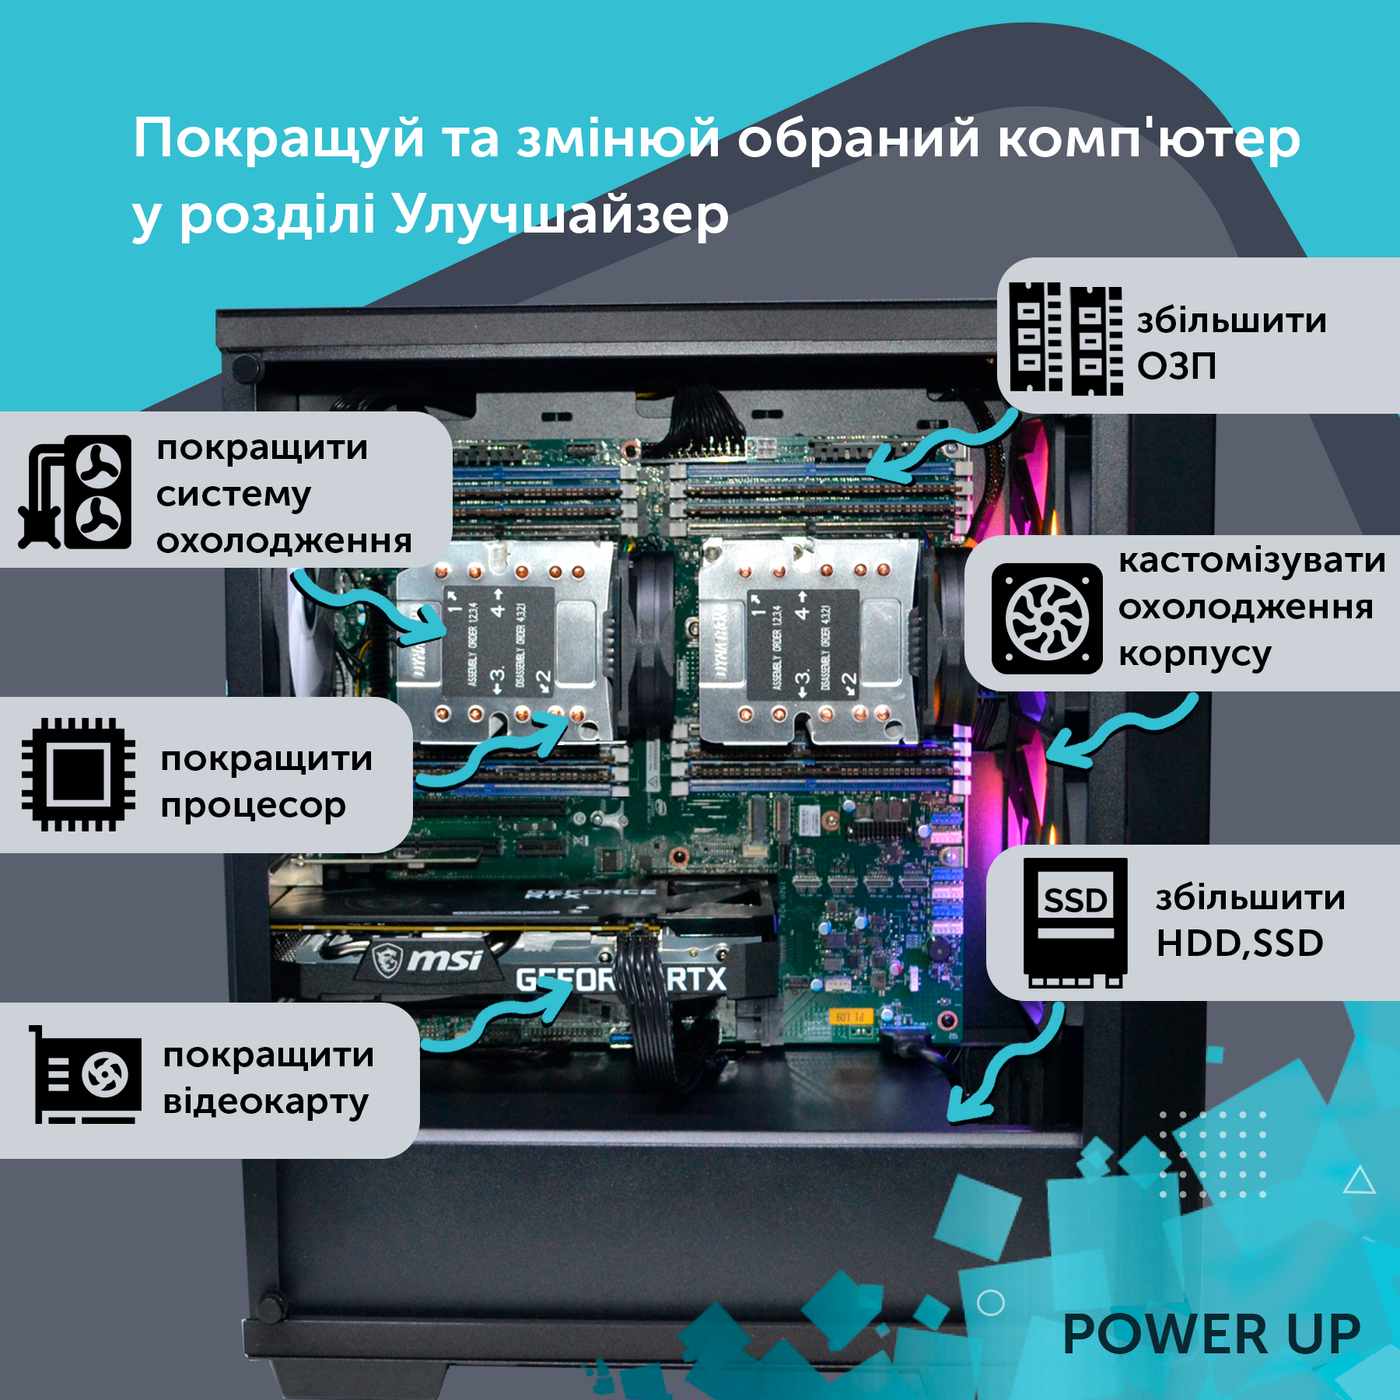 Робоча станція PowerUp Desktop #390 Core i9 14900K/192 GB/SSD 2TB/NVIDIA Quadro RTX A4000 16GB